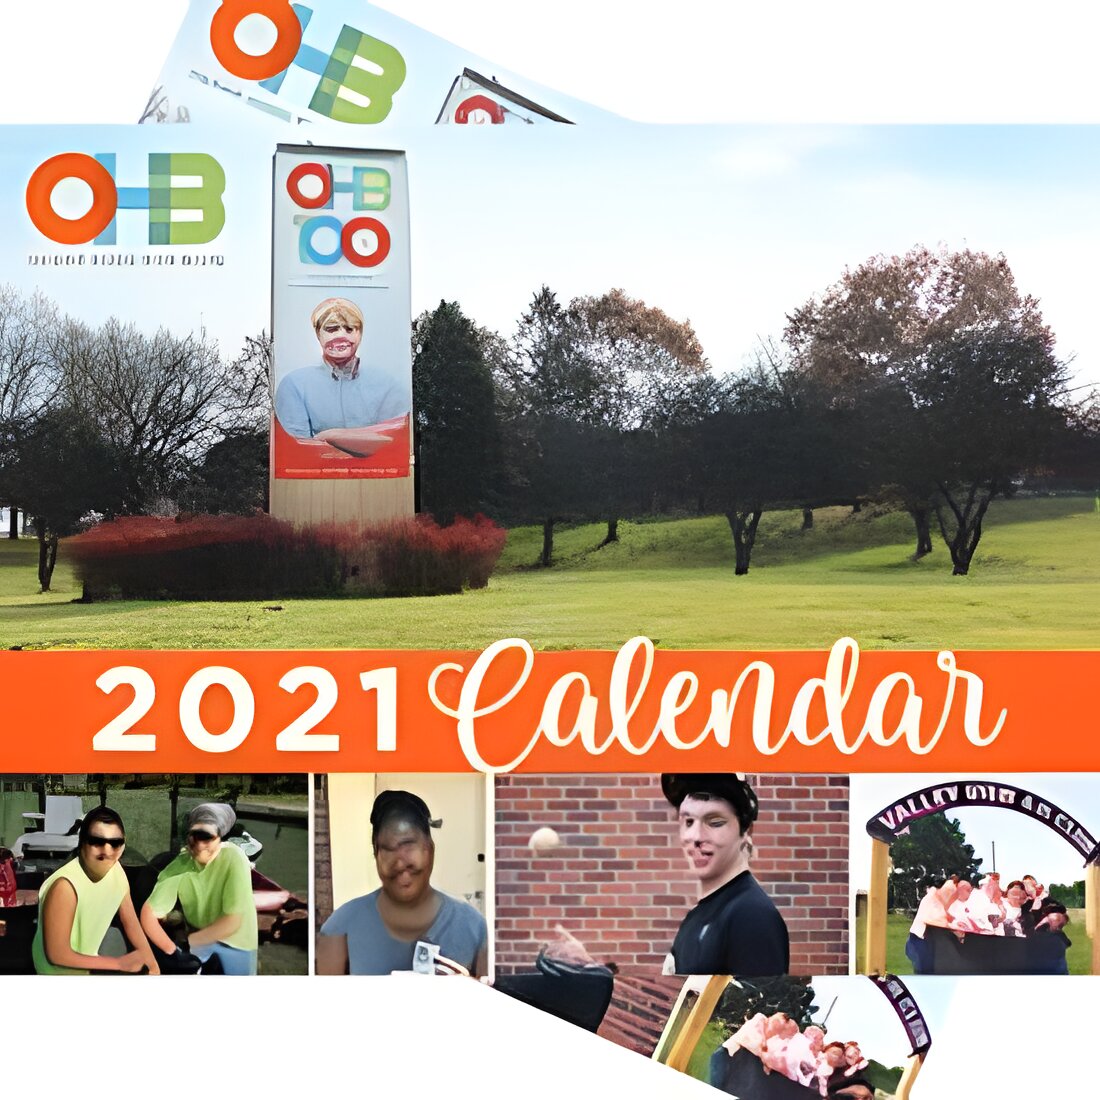 Free 2021 Calendar from OHB